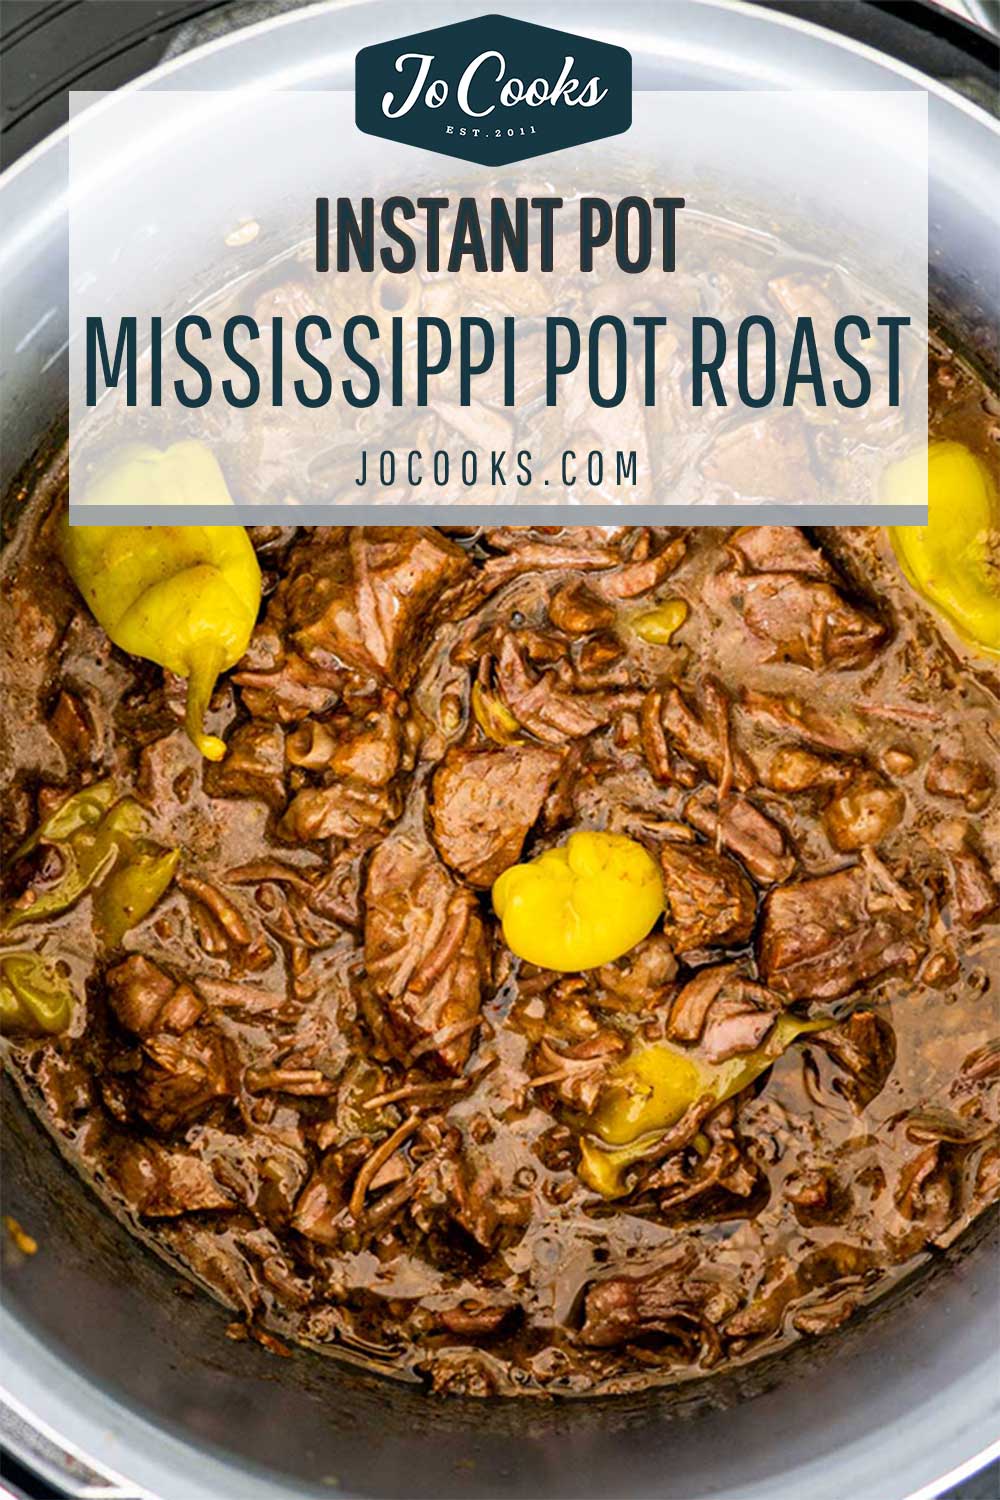 https://www.jocooks.com/wp-content/uploads/2020/06/instant-pot-mississippi-pot-roast.jpg